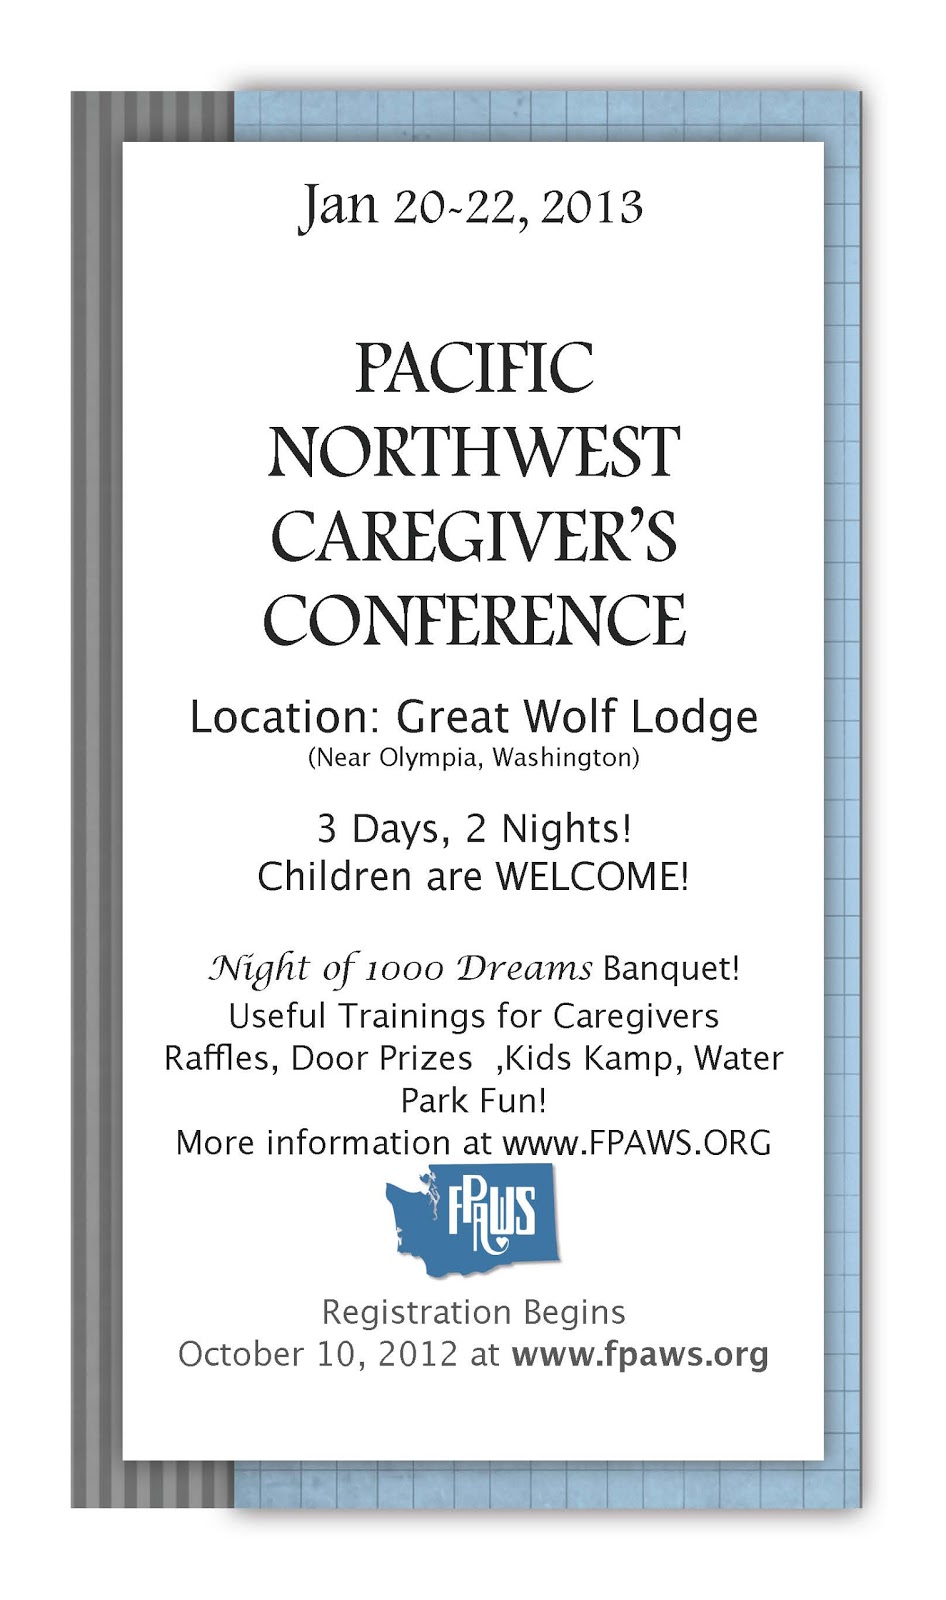 National Foster Parent Association: 2013 Pacific Northwest Caregiver's